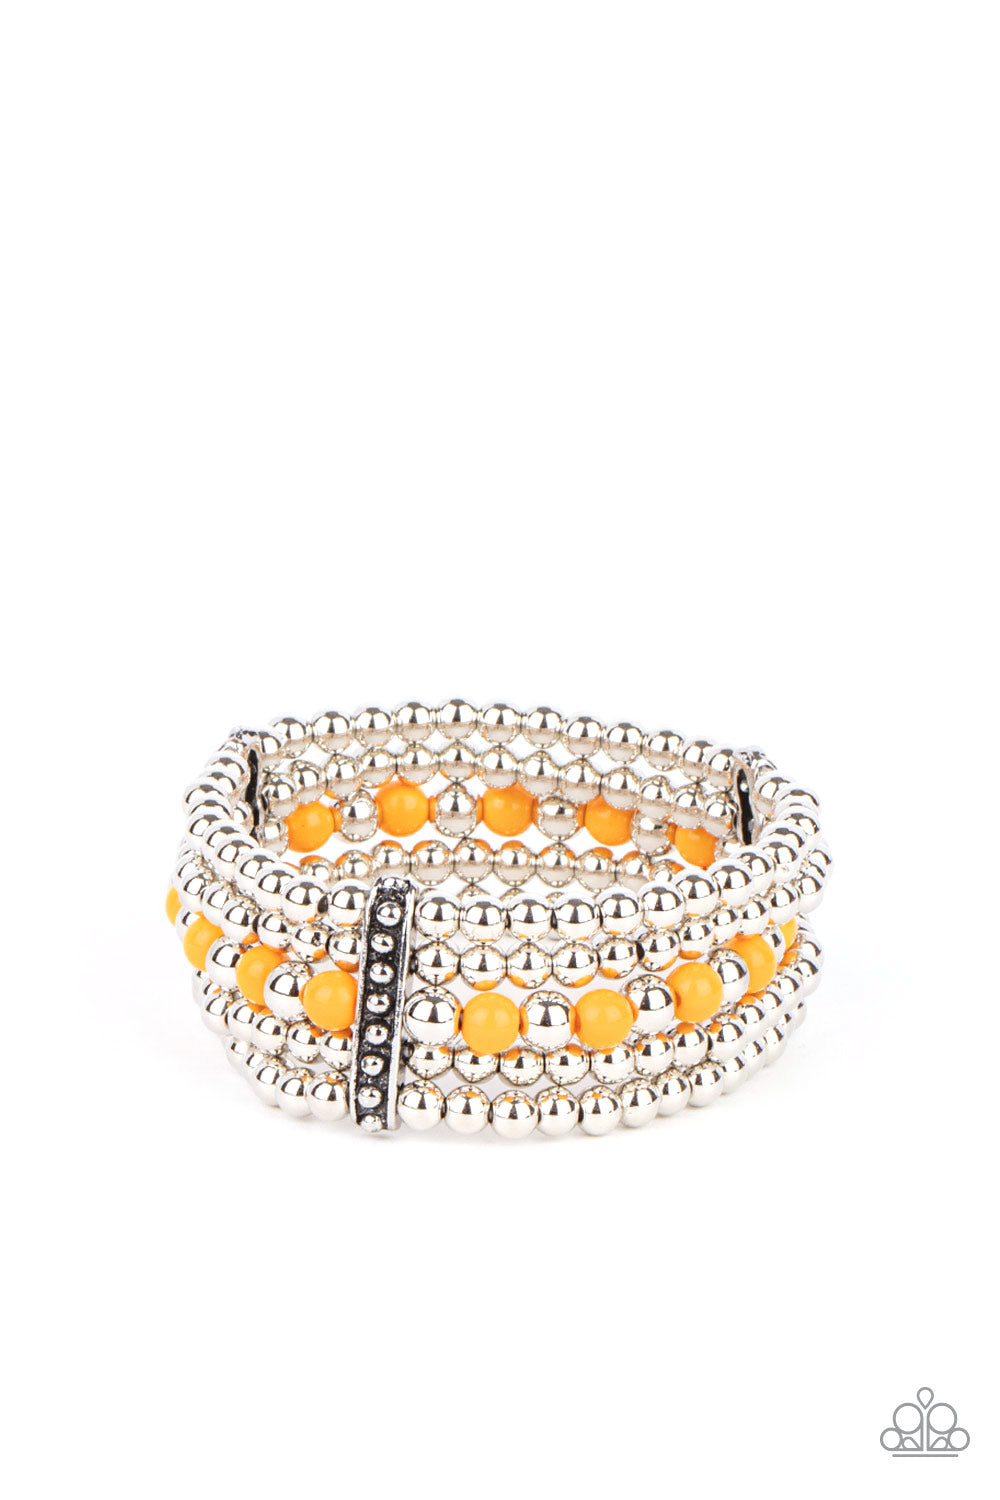 Gloss Over The Details Orange Bracelet - Paparazzi Accessories